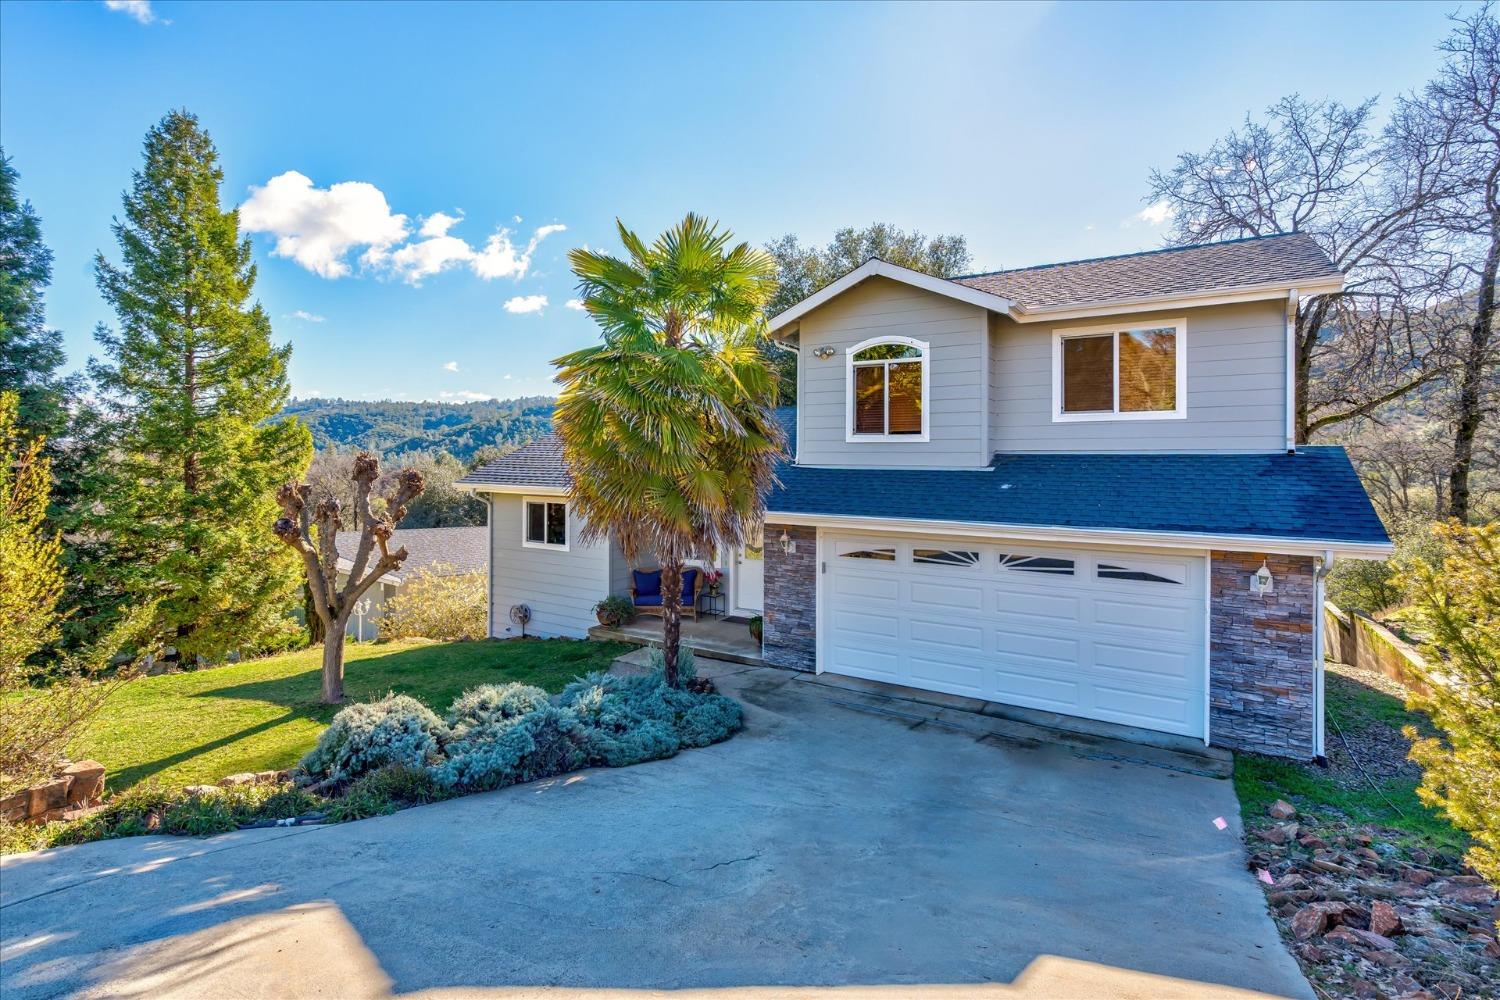 Photo of 5115 Terrace View Ln in Mariposa, CA